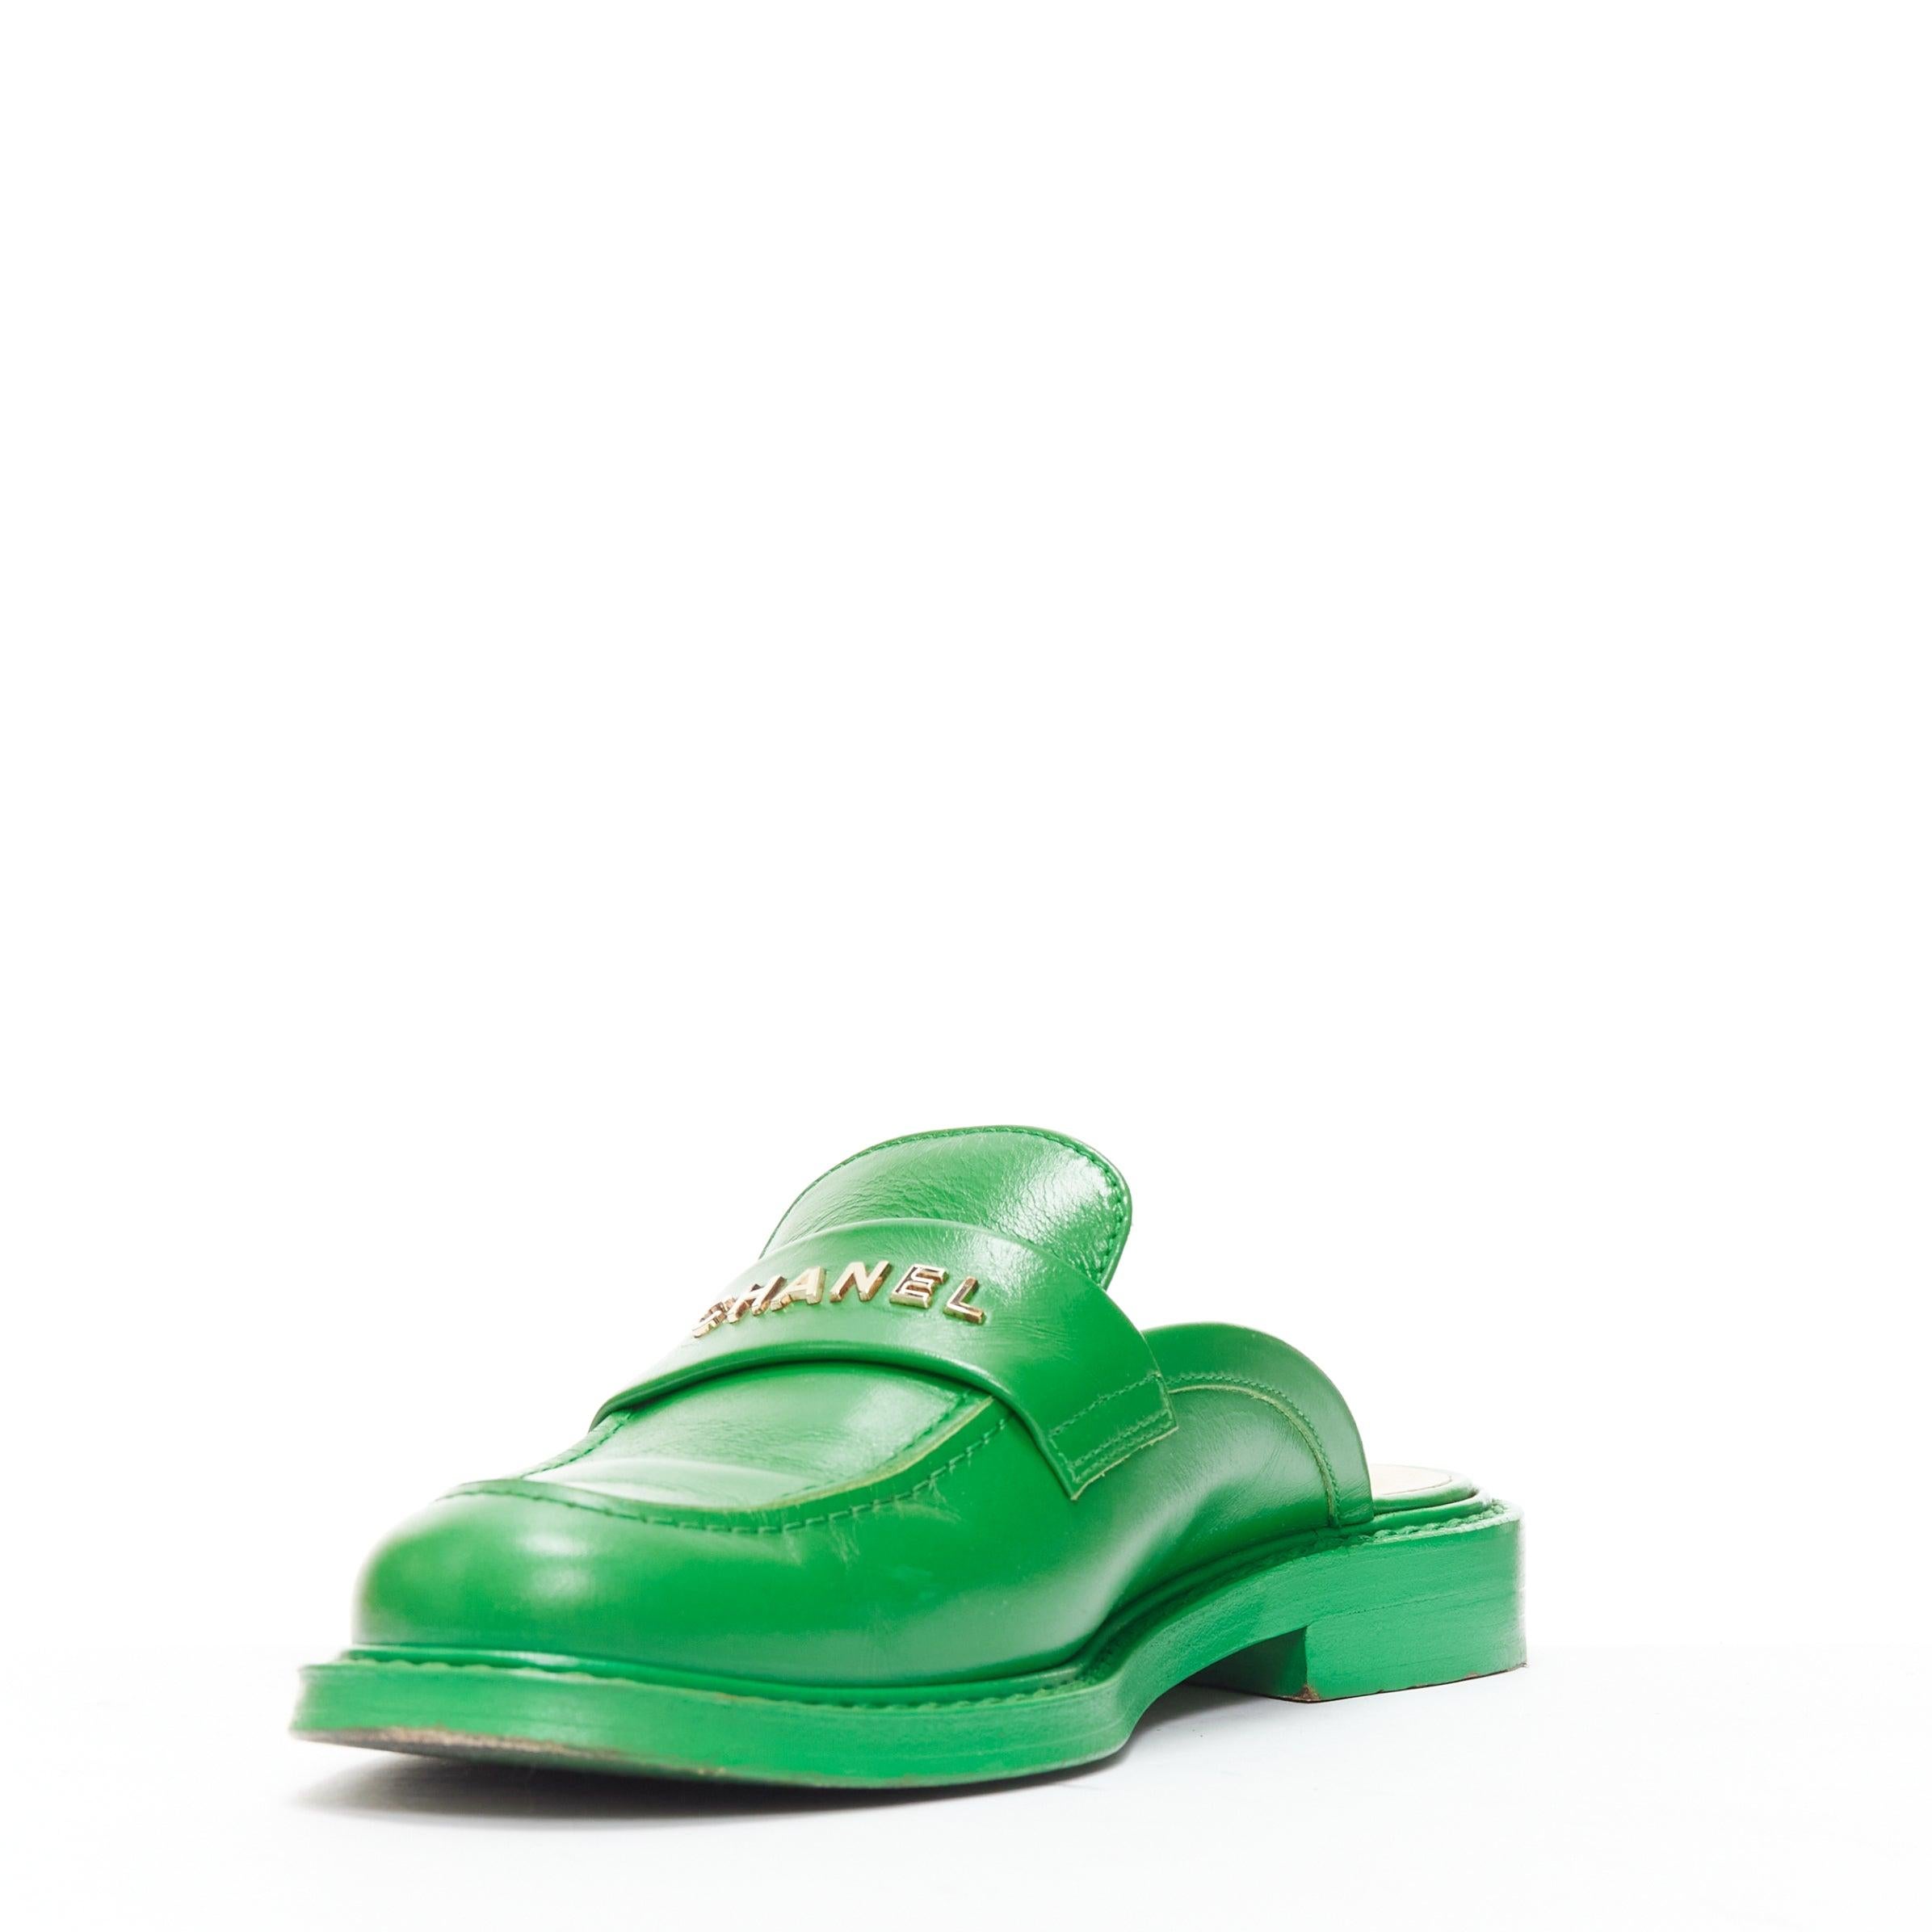 Women's rare CHANEL PHARRELL green leather logo embellished slip on loafer flats EU37.5 For Sale